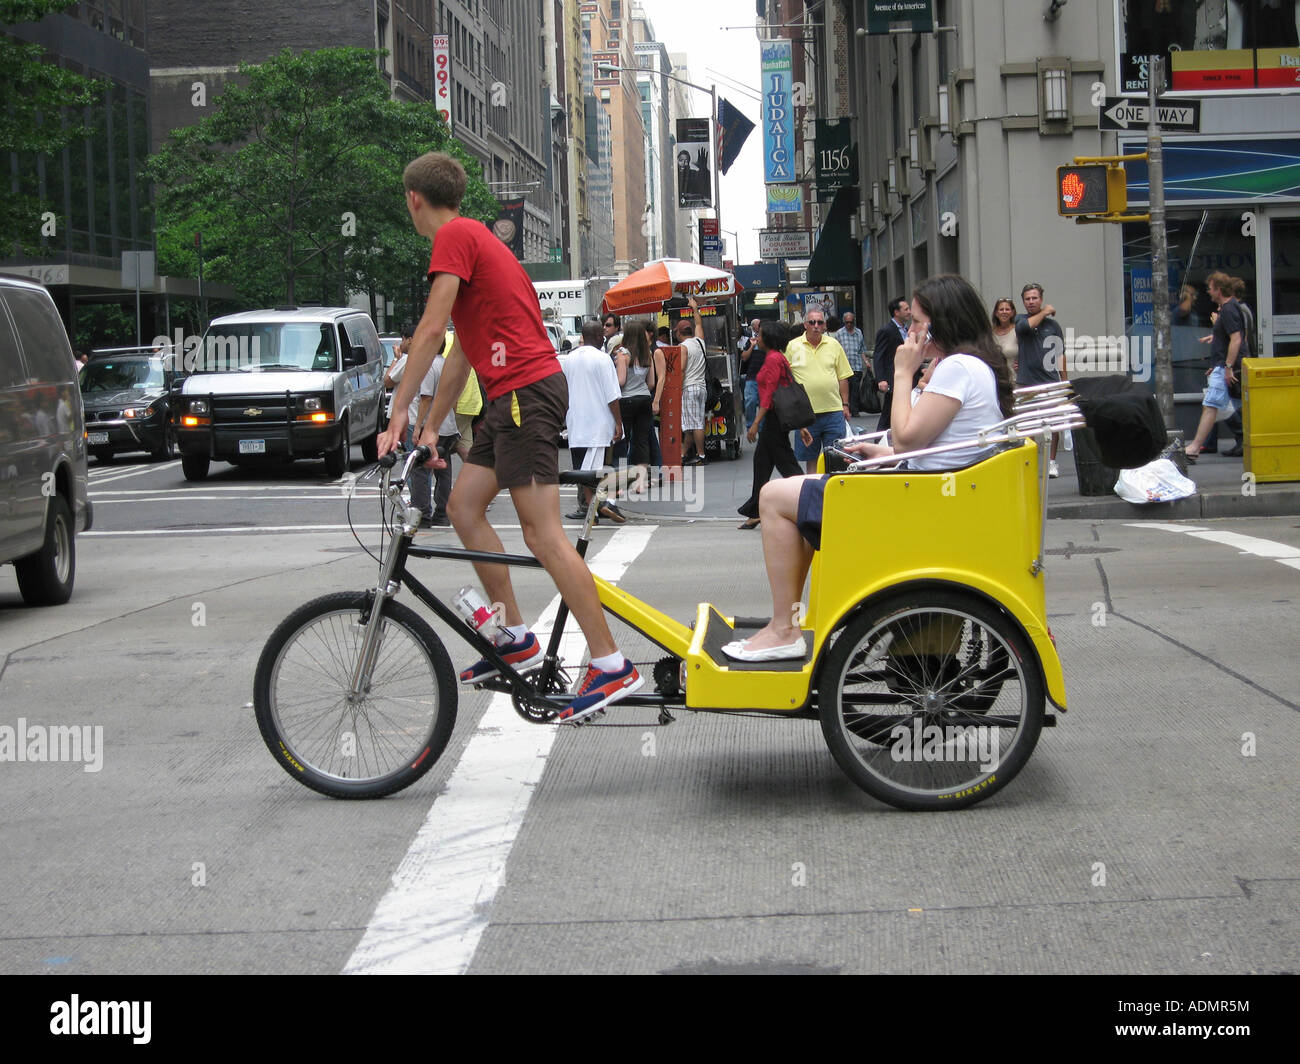 Taxi bike in New York City Stock Photo - Alamy